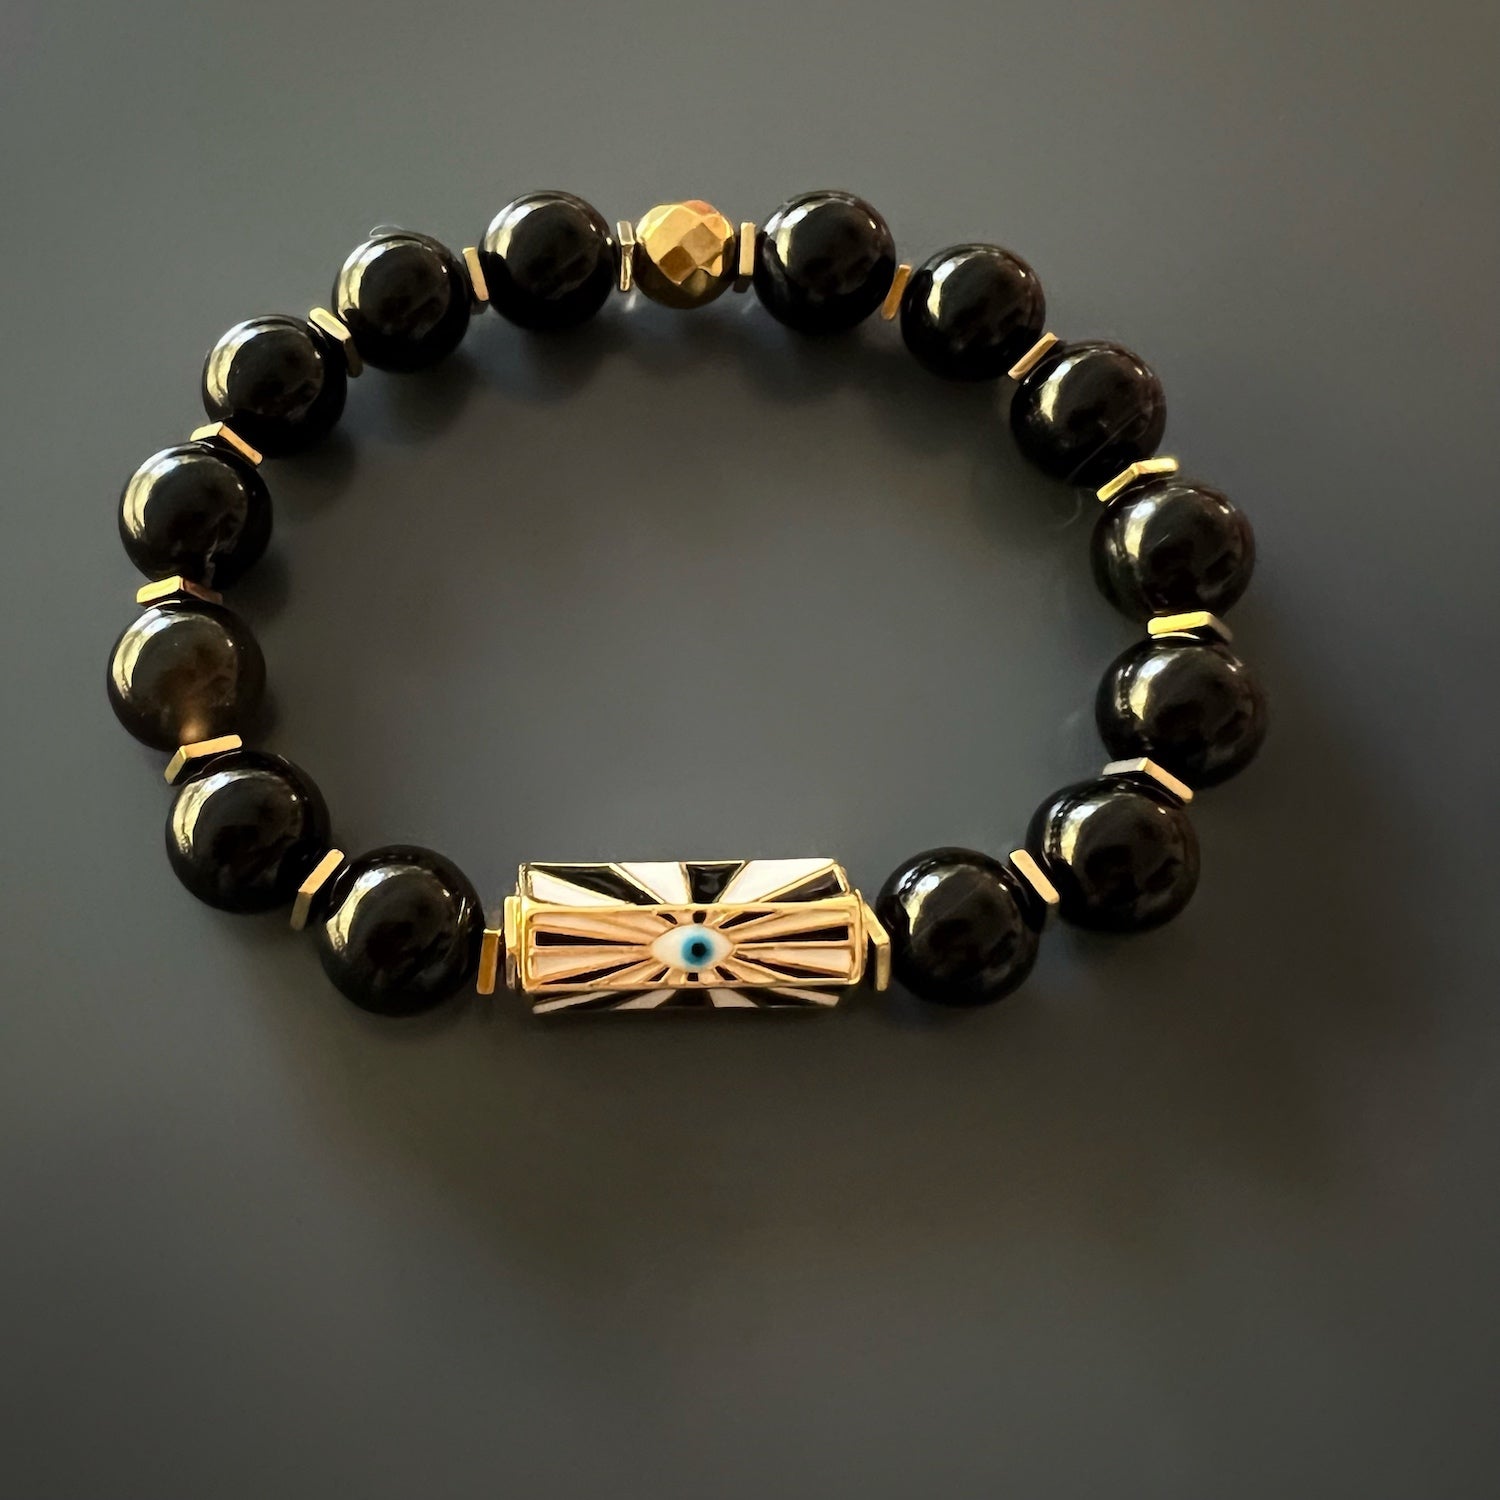 Elegant Black Onyx Bracelet with Gold and Hematite Stones